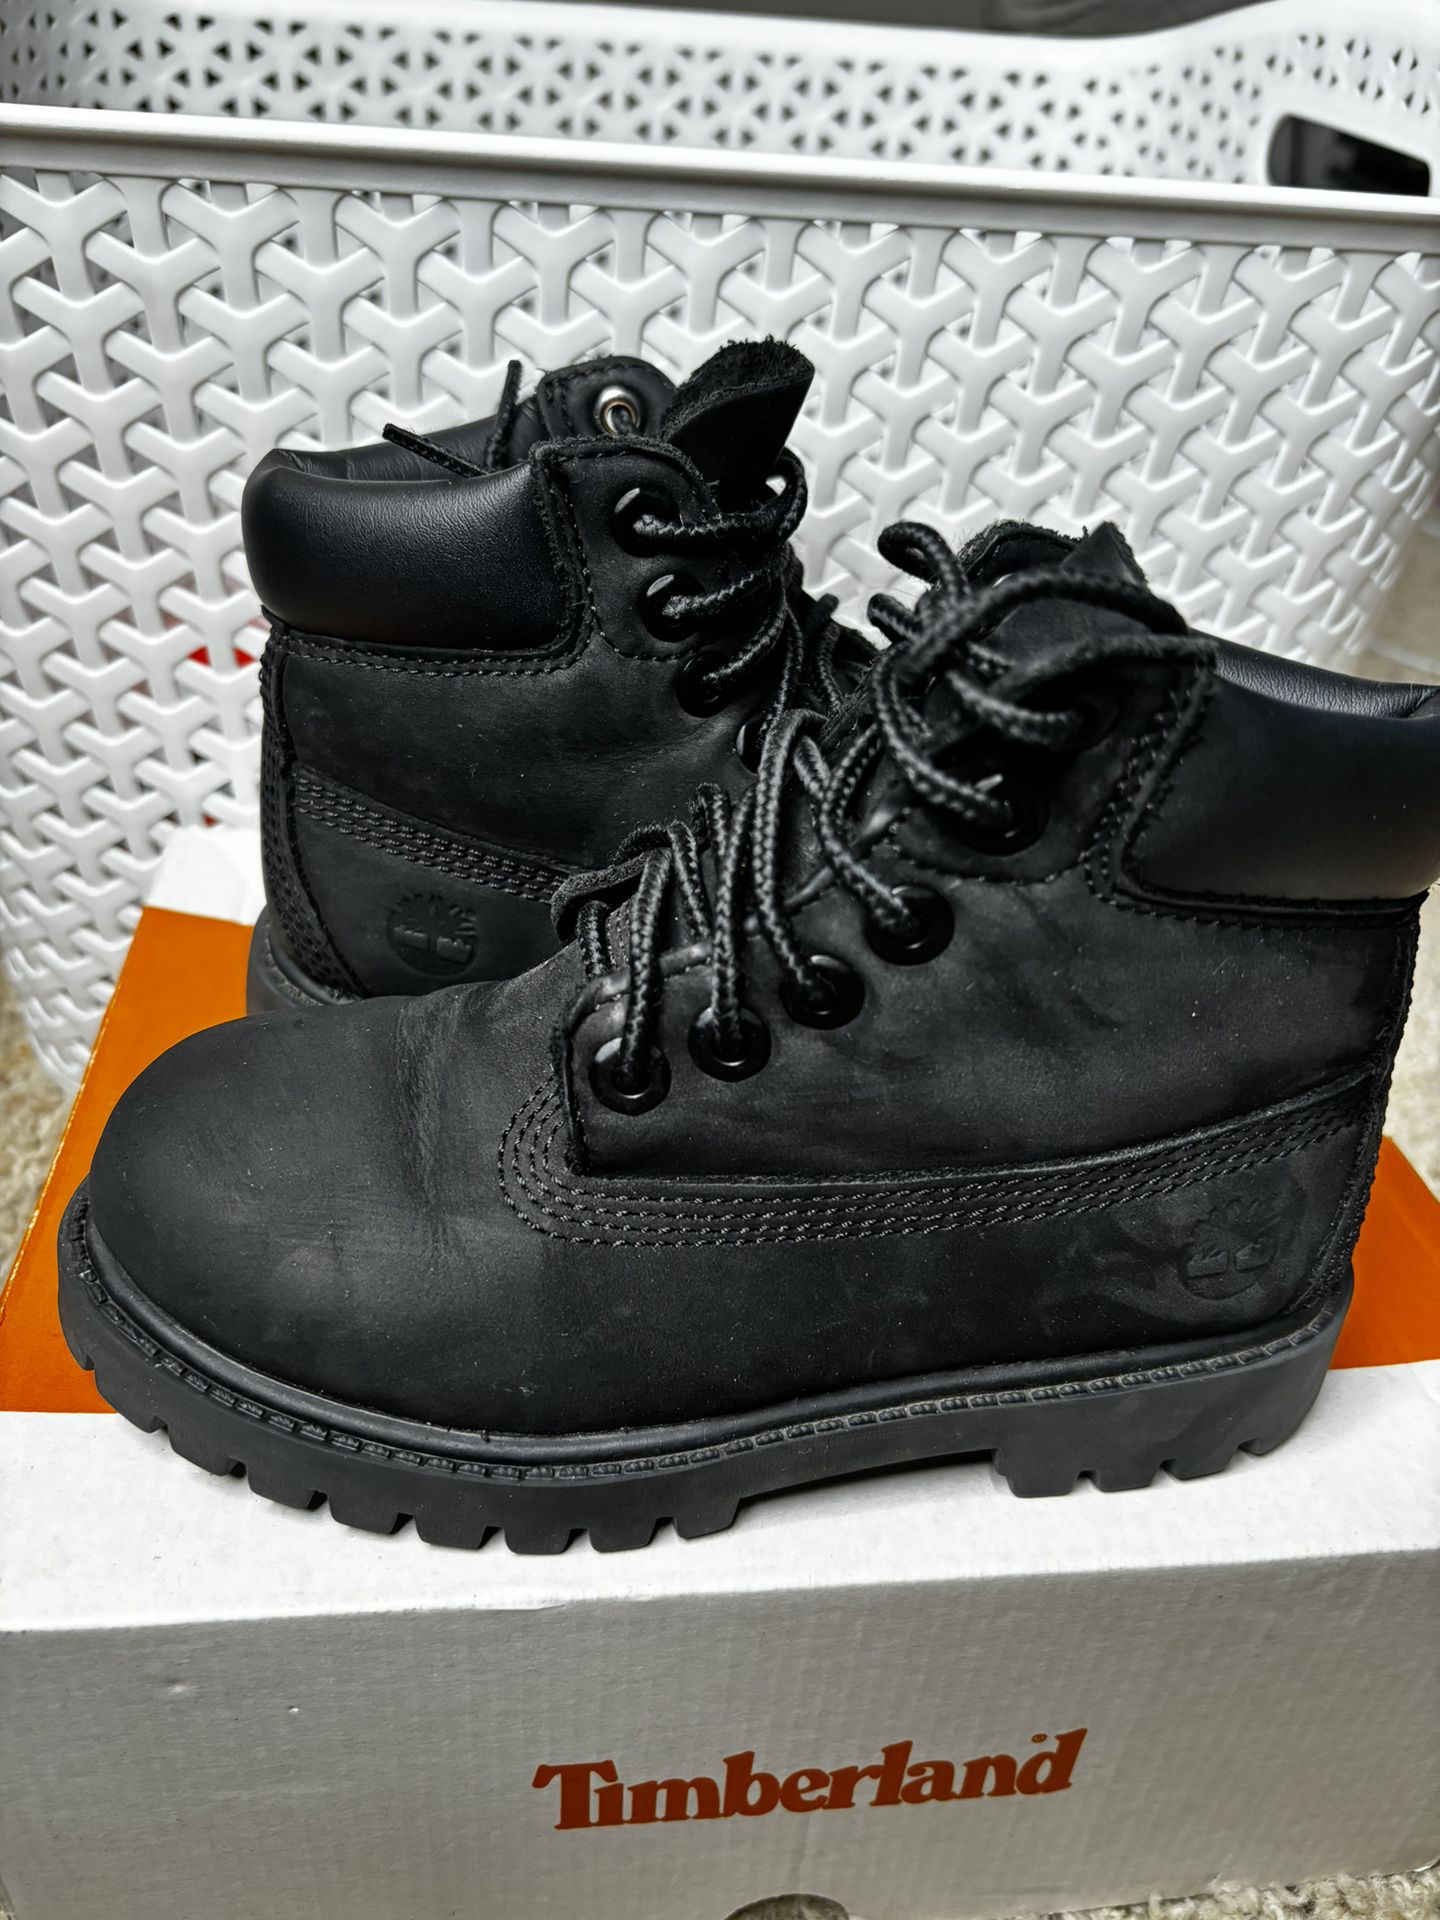 Black Toddler Size 10 M/M Black Timberland Boots